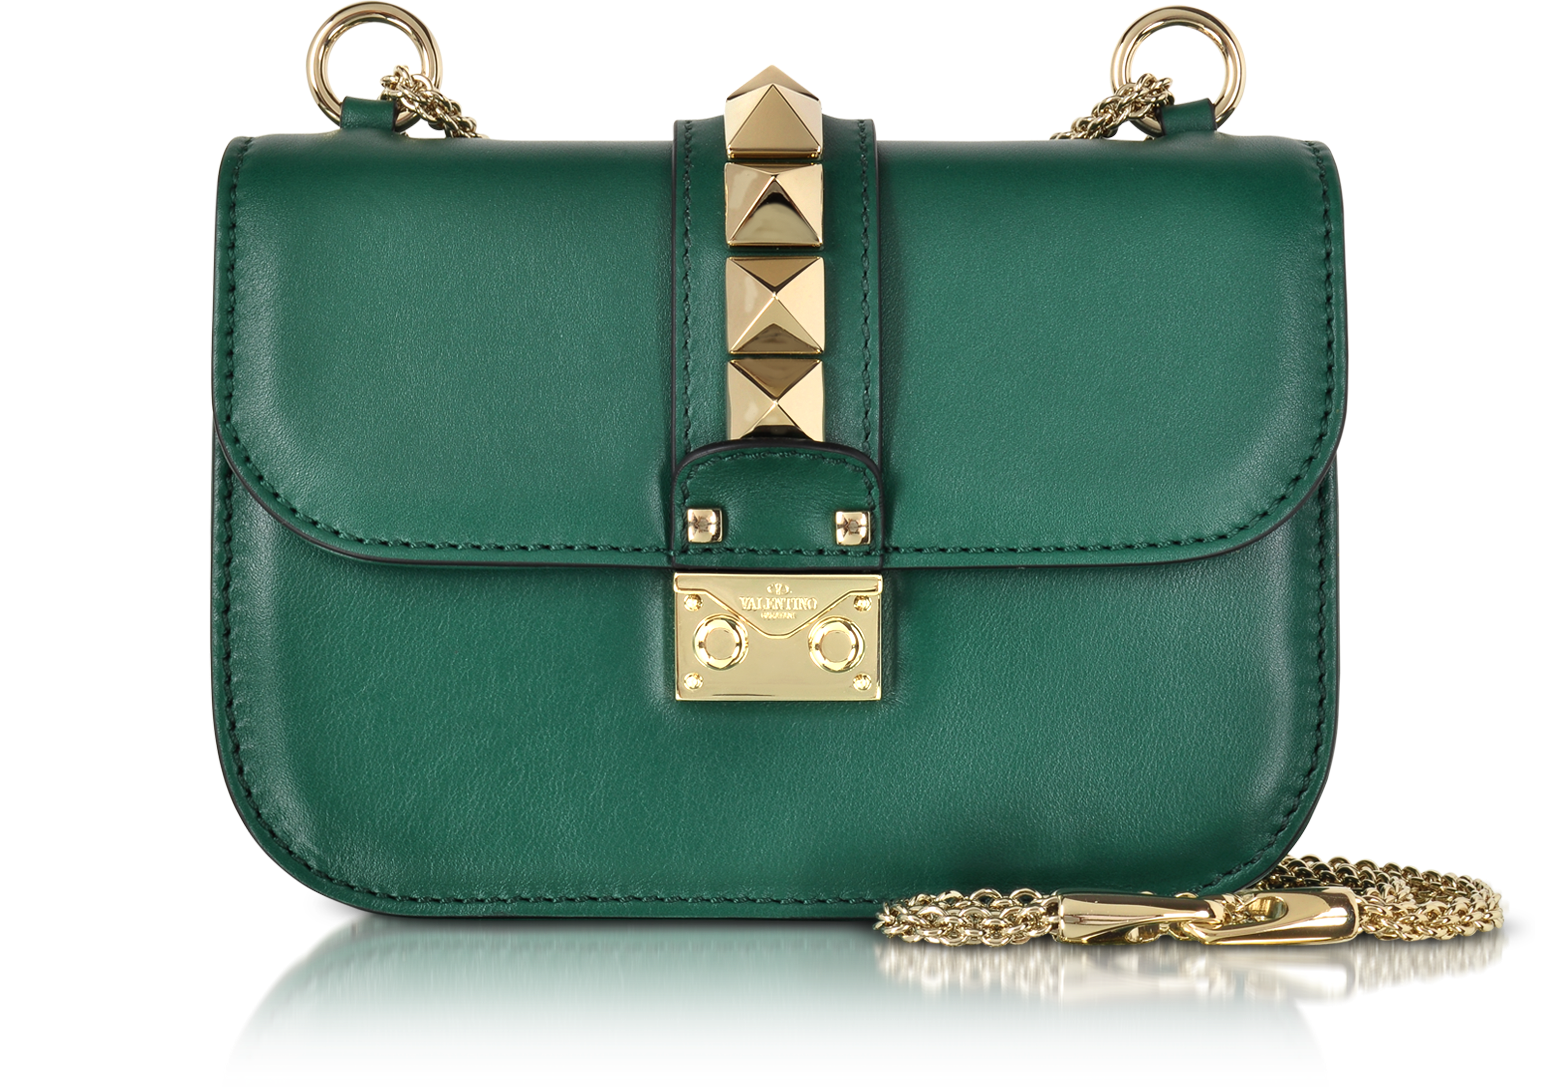 Valentino Smeraldo Green Leather Shoulder Bag at FORZIERI